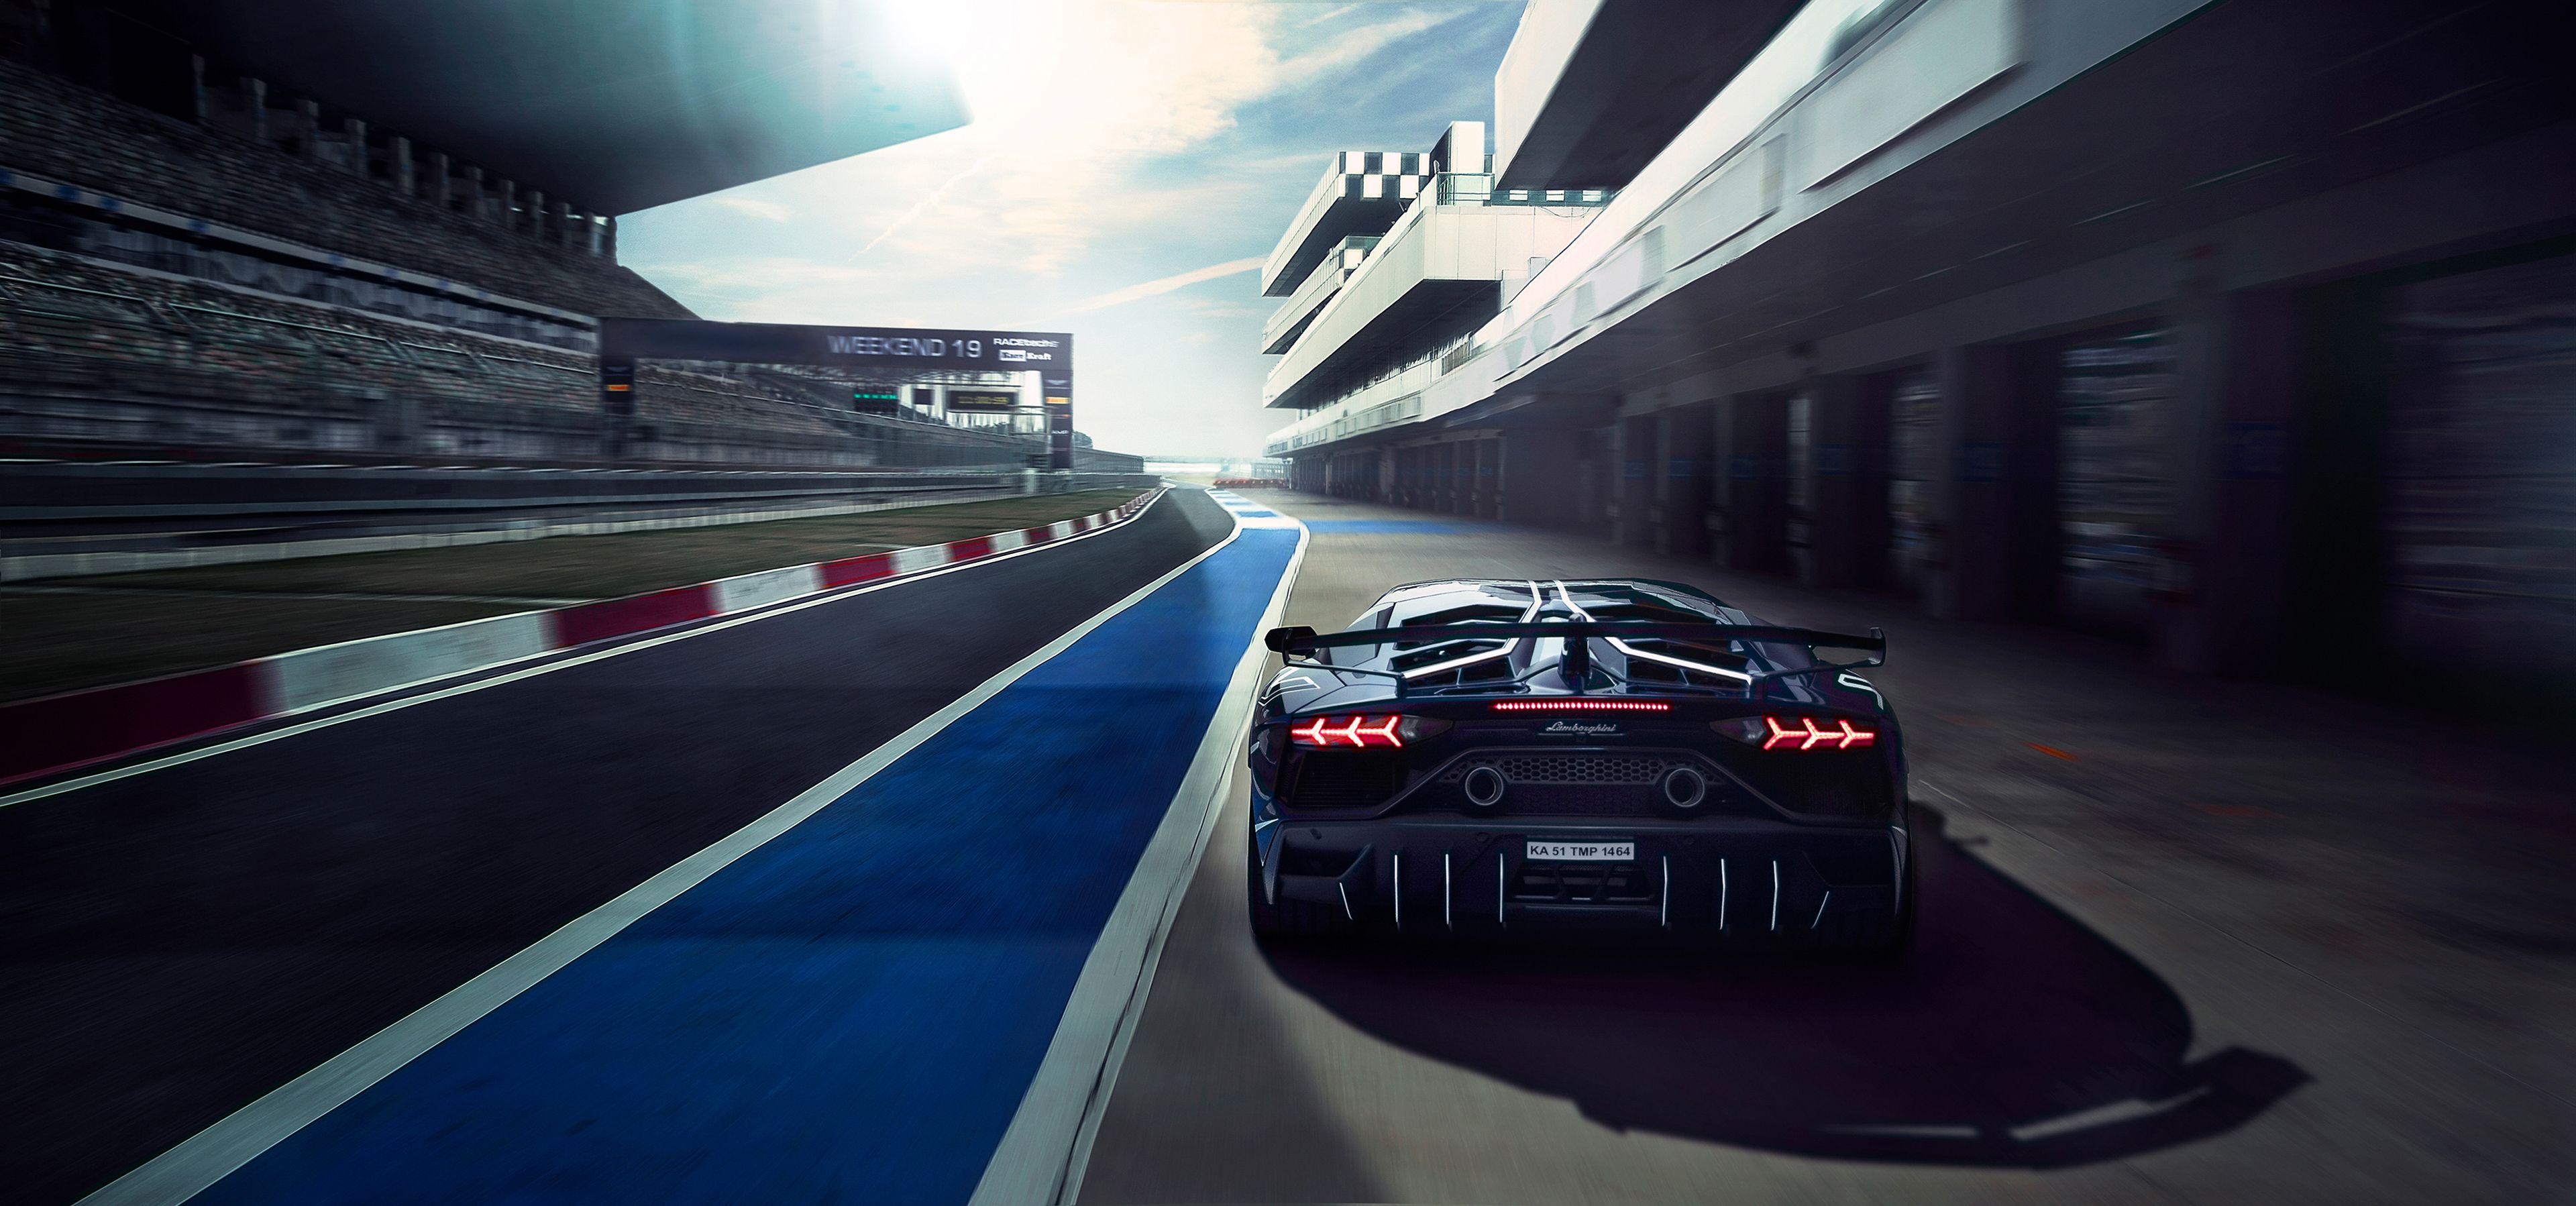 Wallpaper Lamborghini Aventador SVJ, Race track, 4K, Automotive / Cars,. Wallpaper for iPhone, Android, Mobile and Desktop